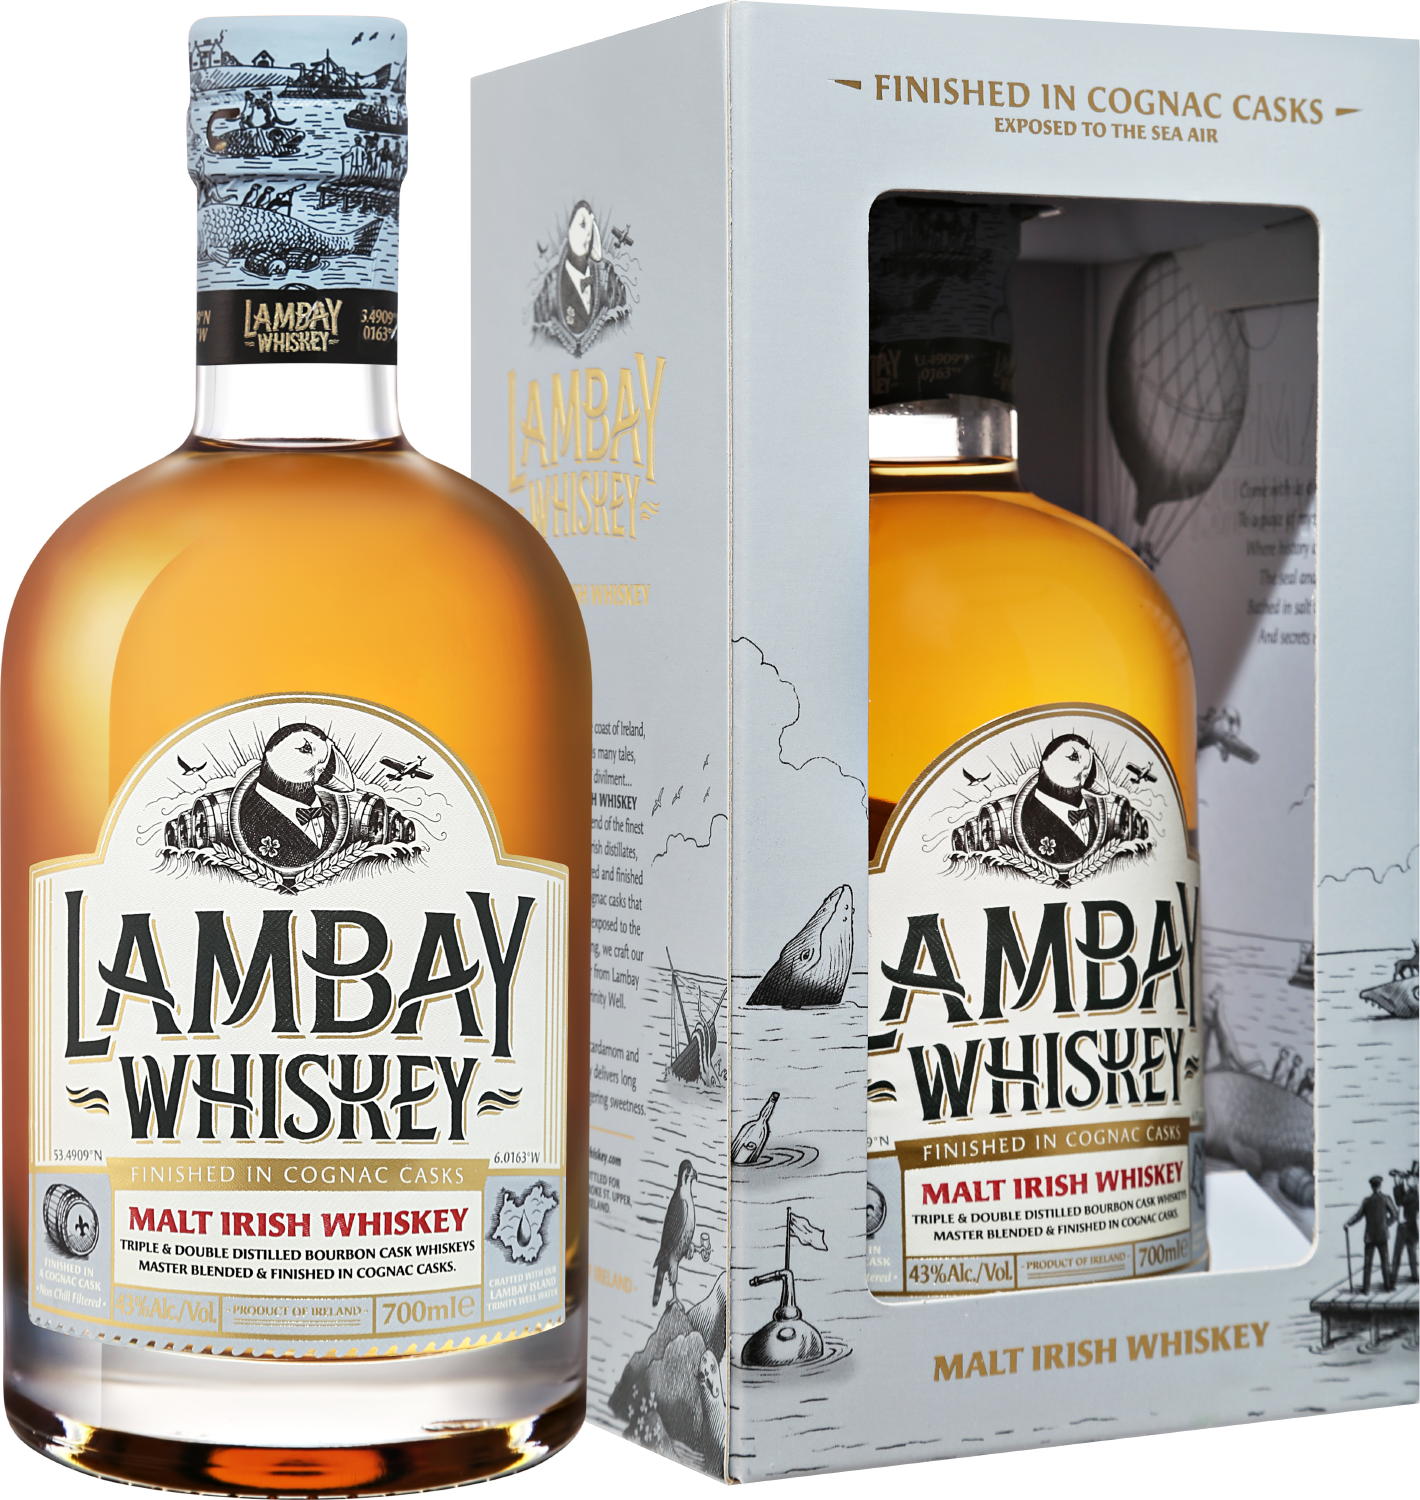 Lambay Malt Irish Whiskey 3 y.o. (gift box) pogues single malt irish whiskey gift box